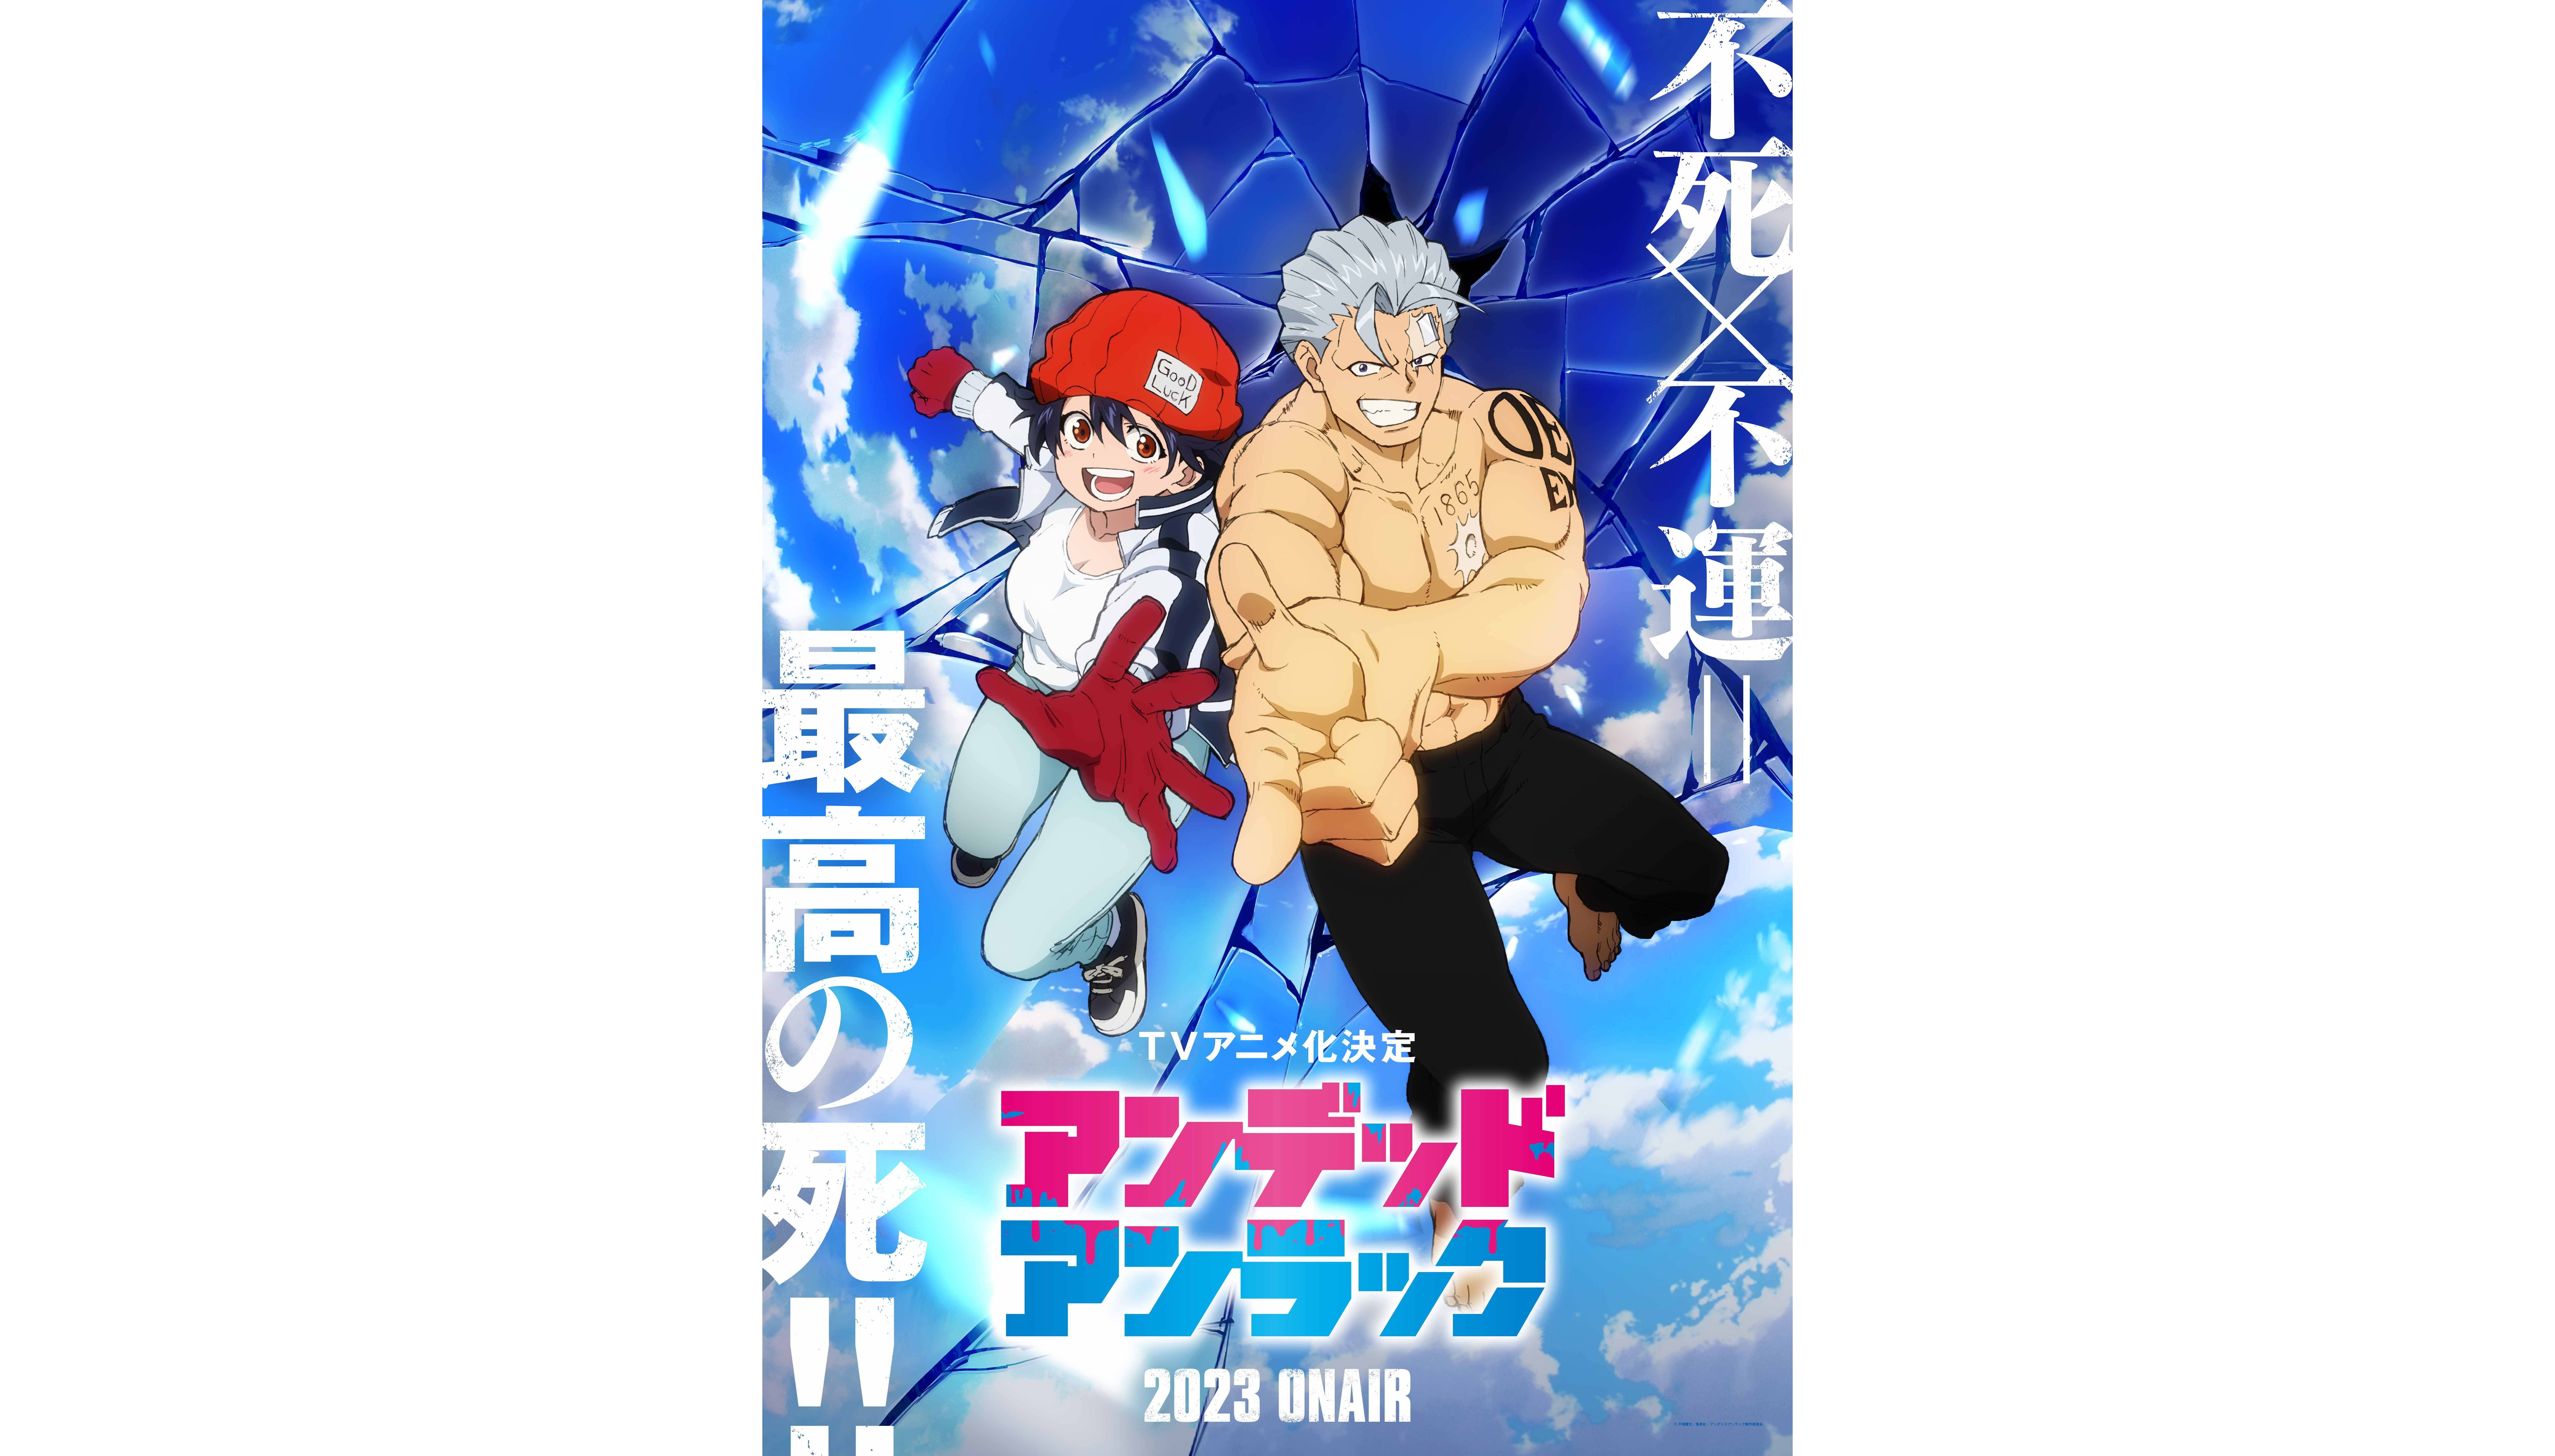 OC] Cartoon Network x Shonen Anime - Completely Original by me